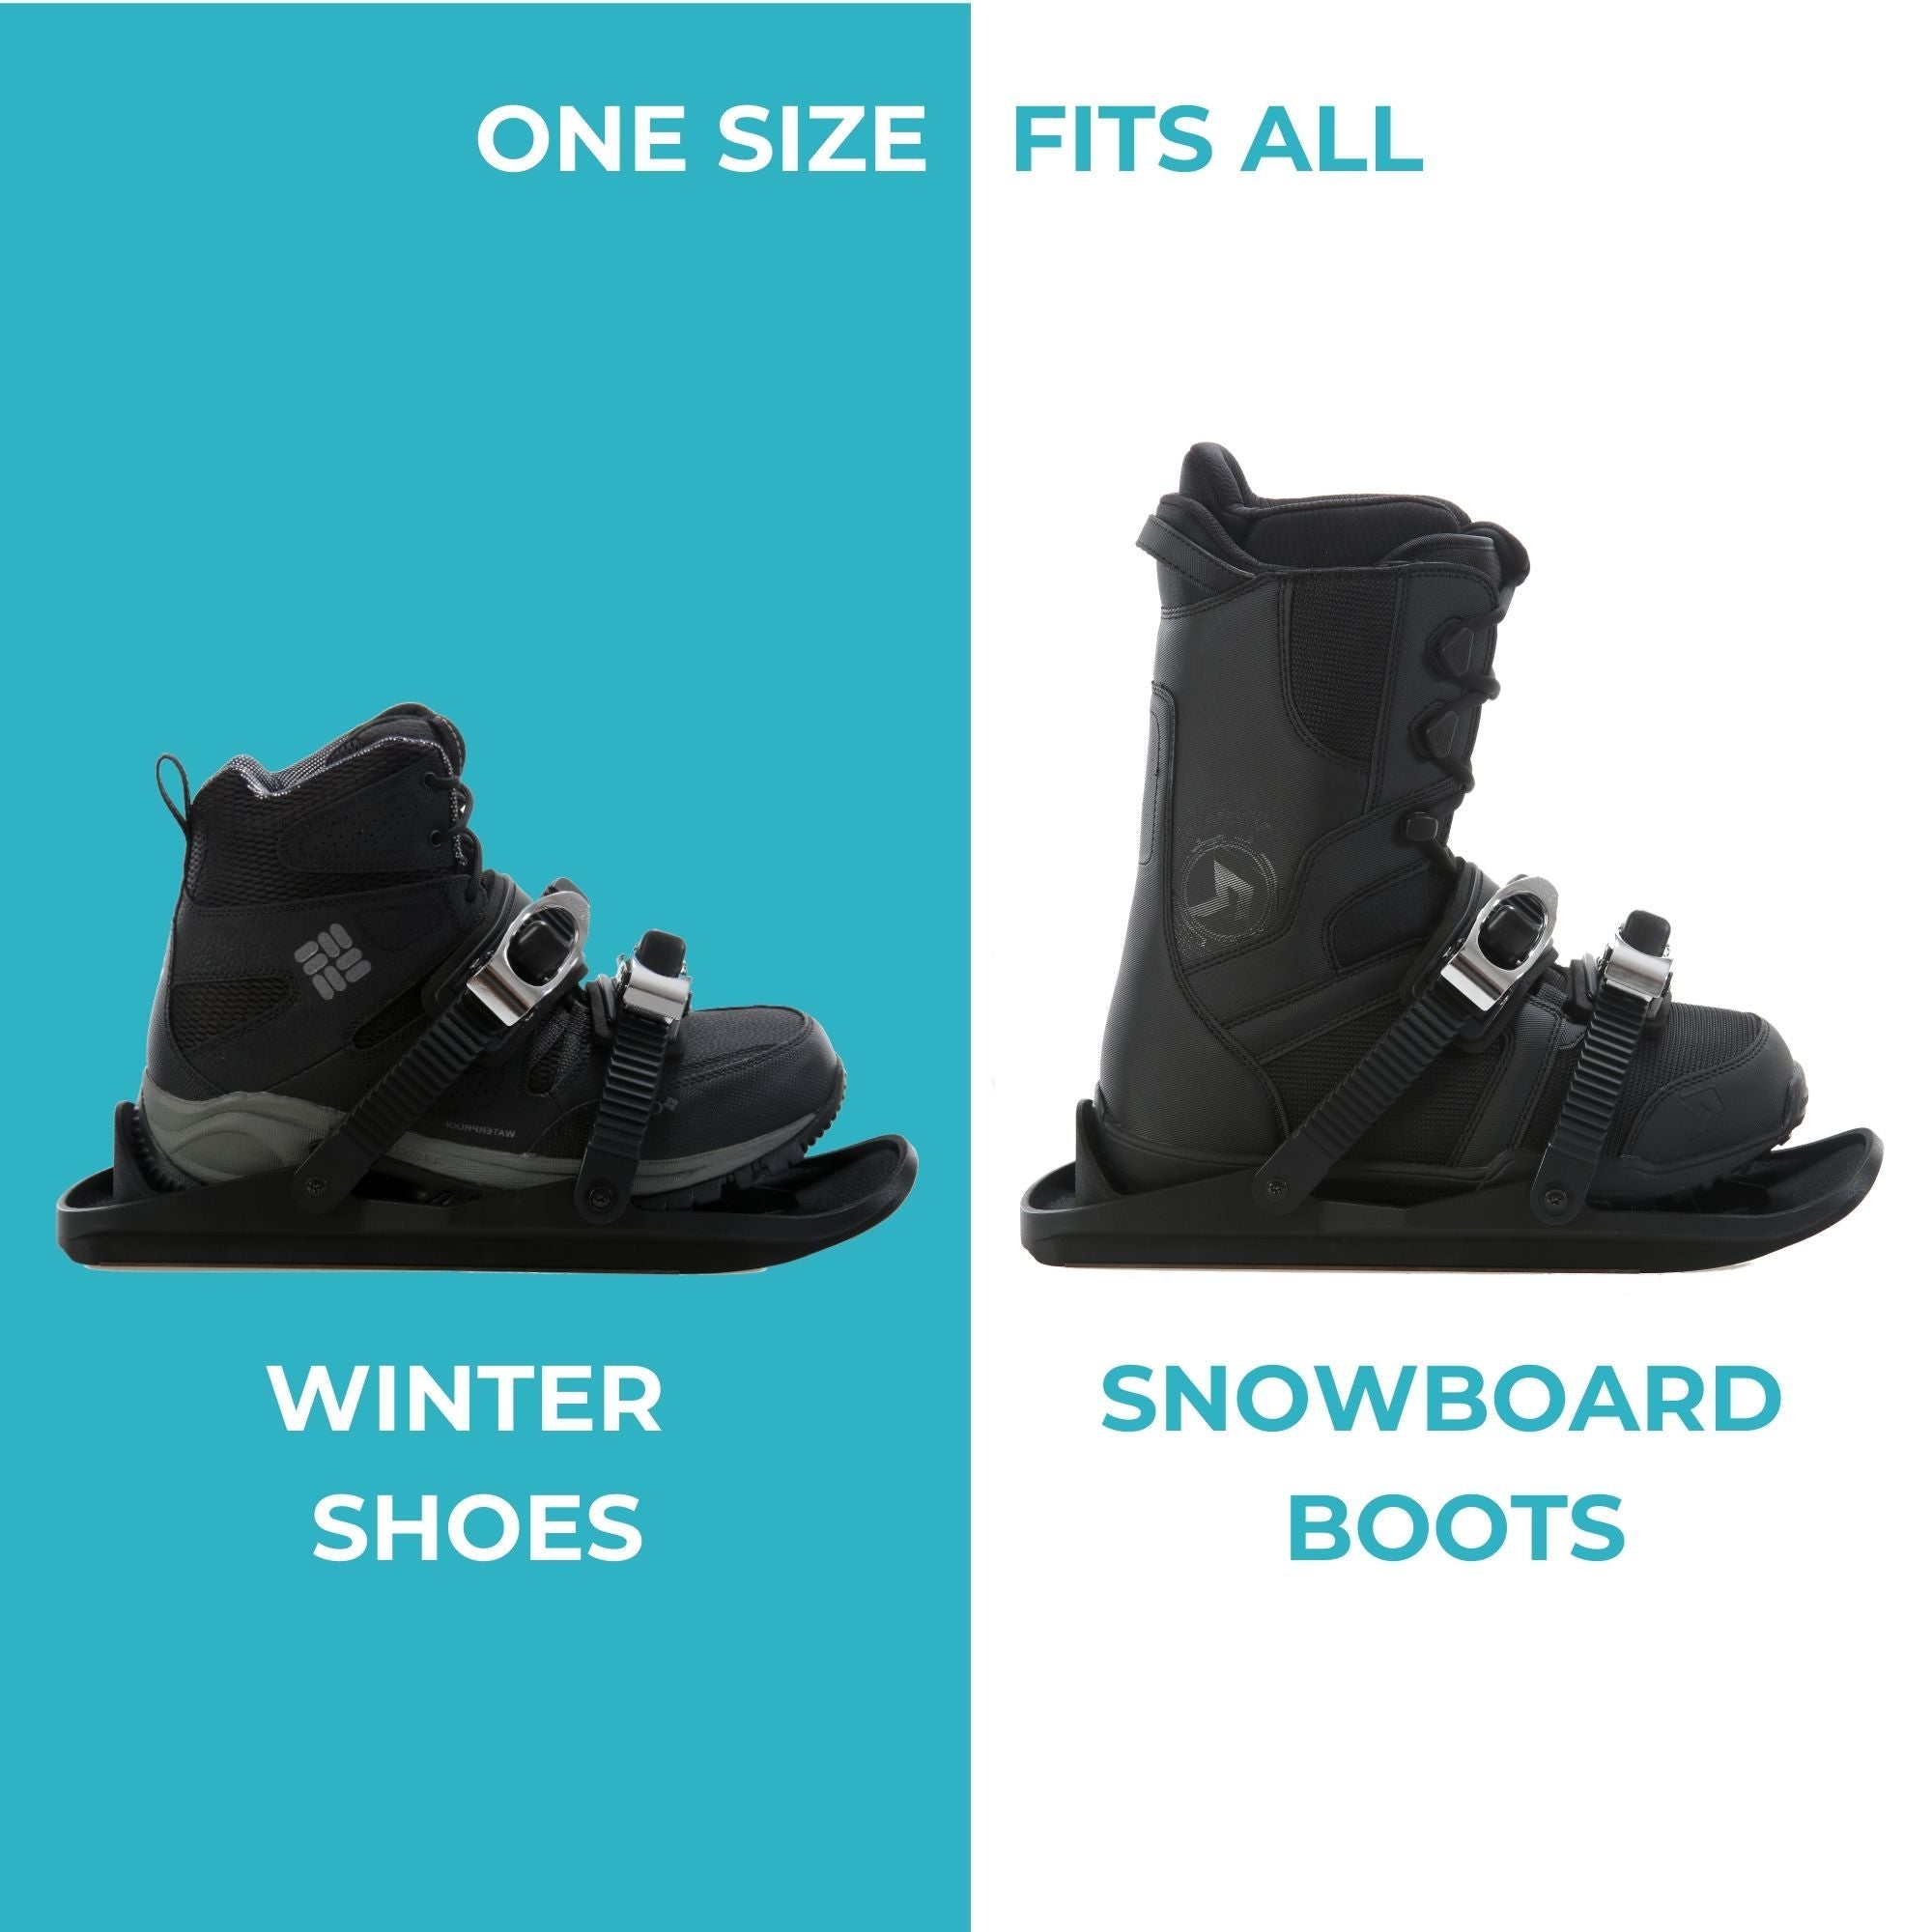 Snowfeet* | Mini Skiskates Short Skis | Secret Sale - snowfeet*